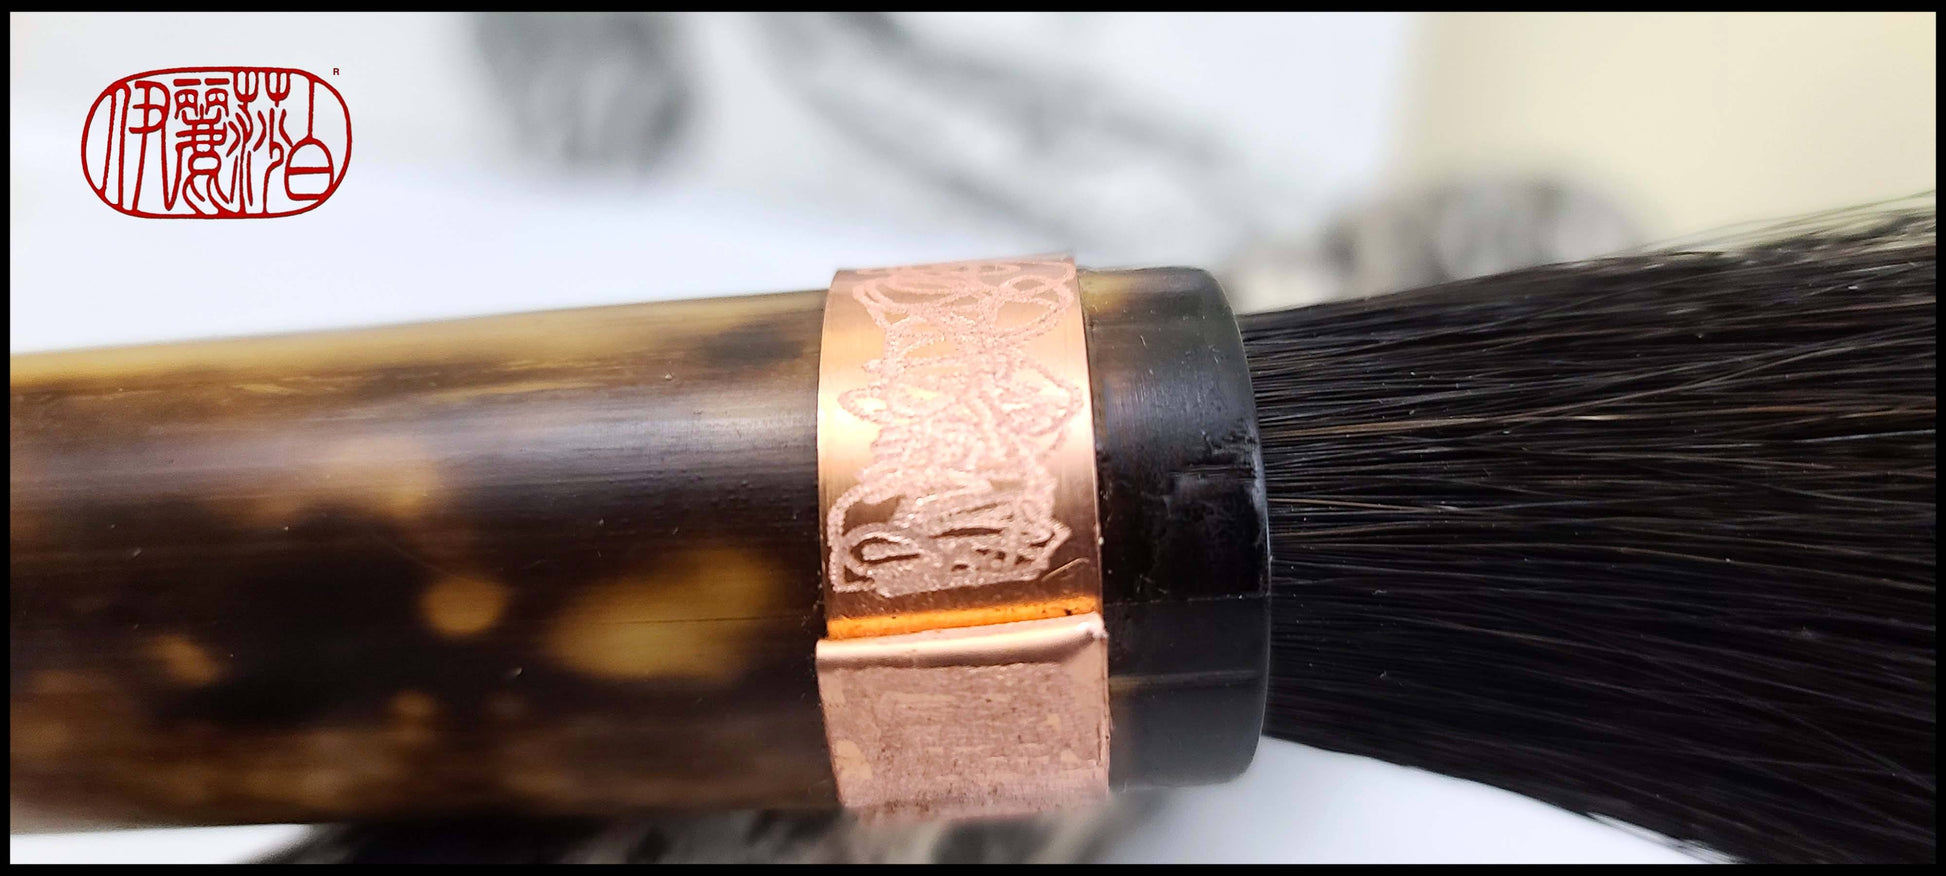 Black Horsehair Paint Brush with Embers Series Bamboo Handle Art Supplies Elizabeth Schowachert Art